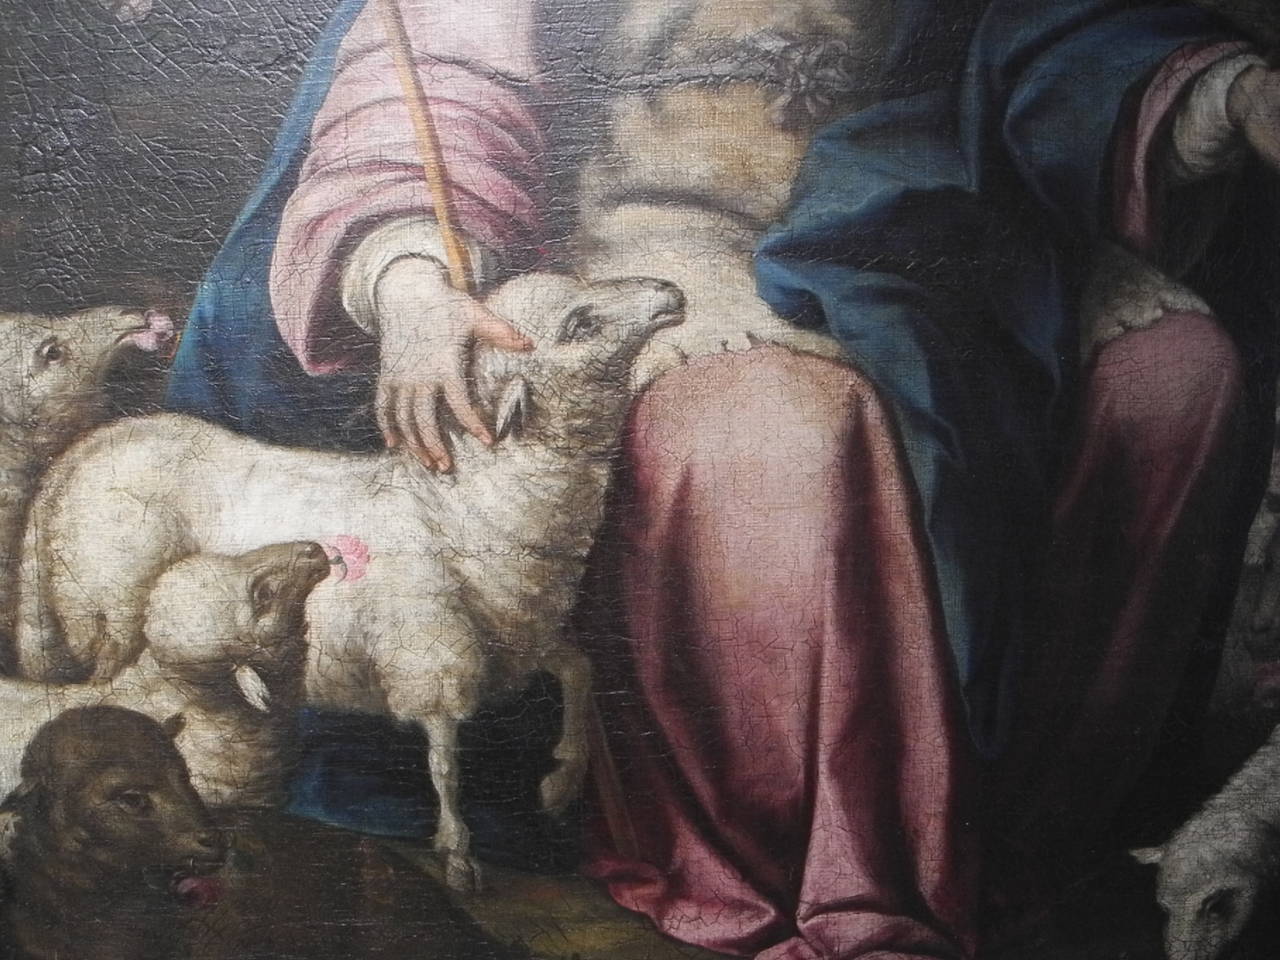 17th century italian painting